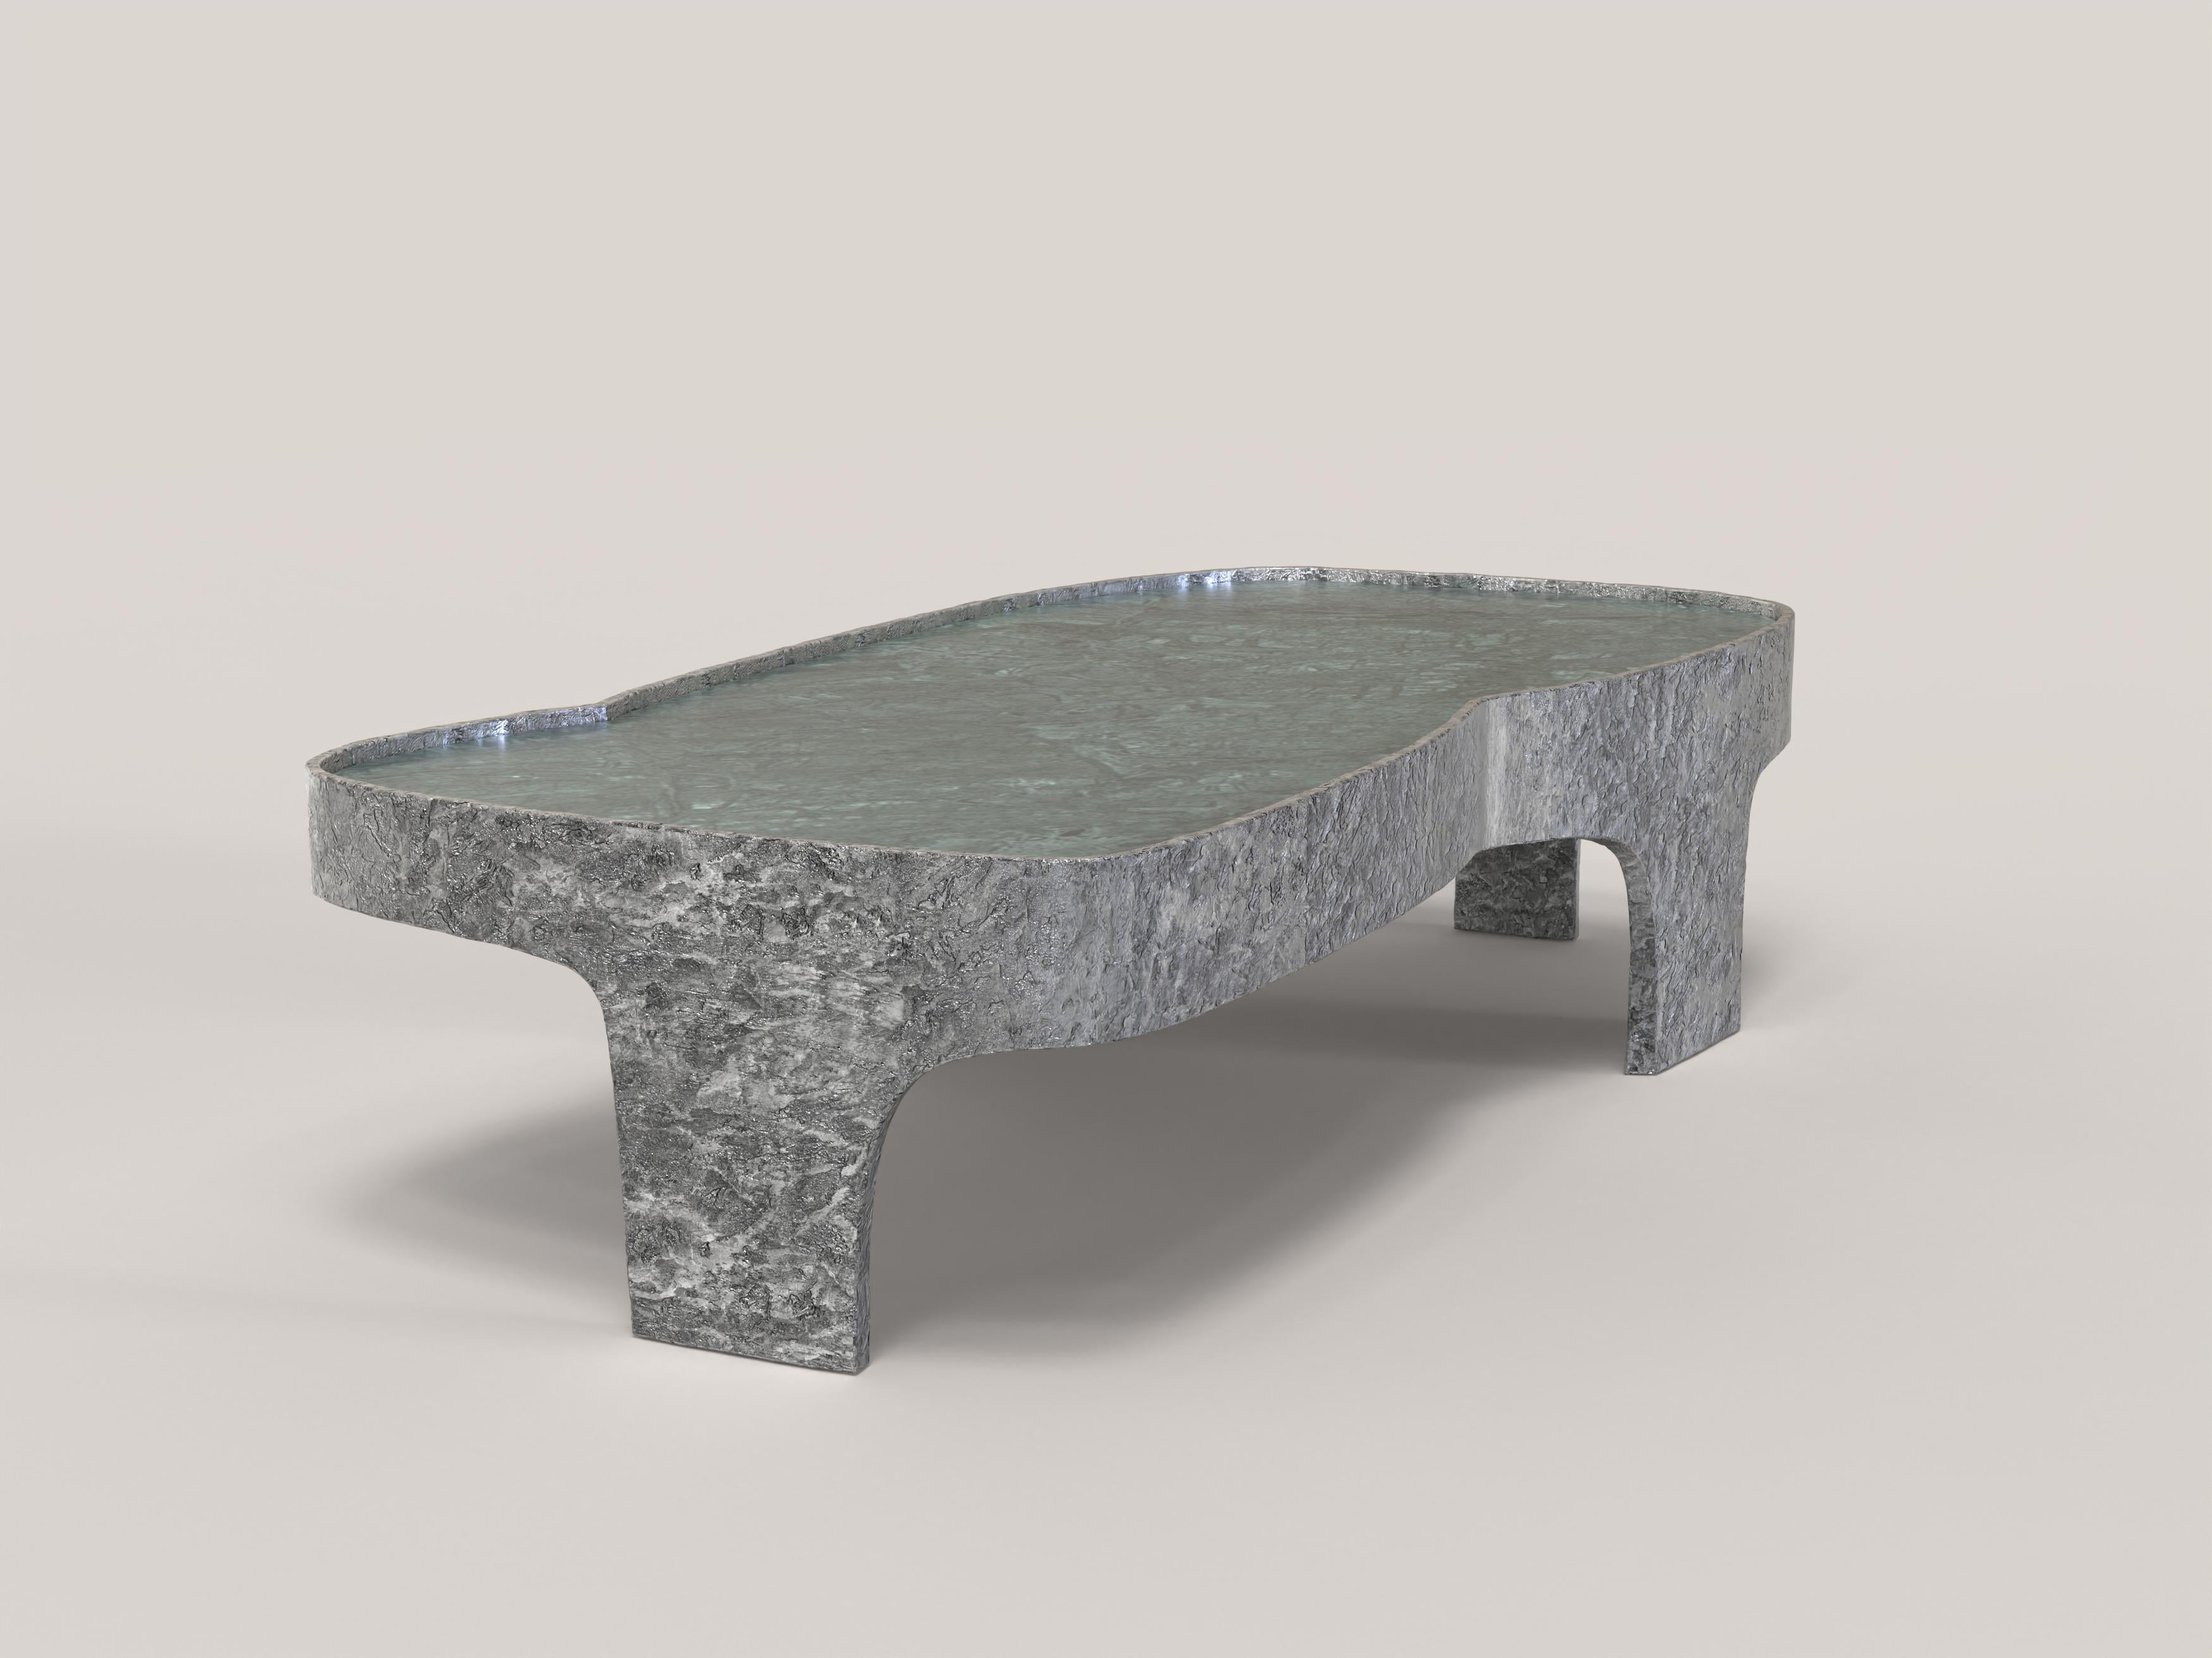 Cast Limited Edition Marble Aluminium Table, Sumatra V3 by Edizione Limitata For Sale